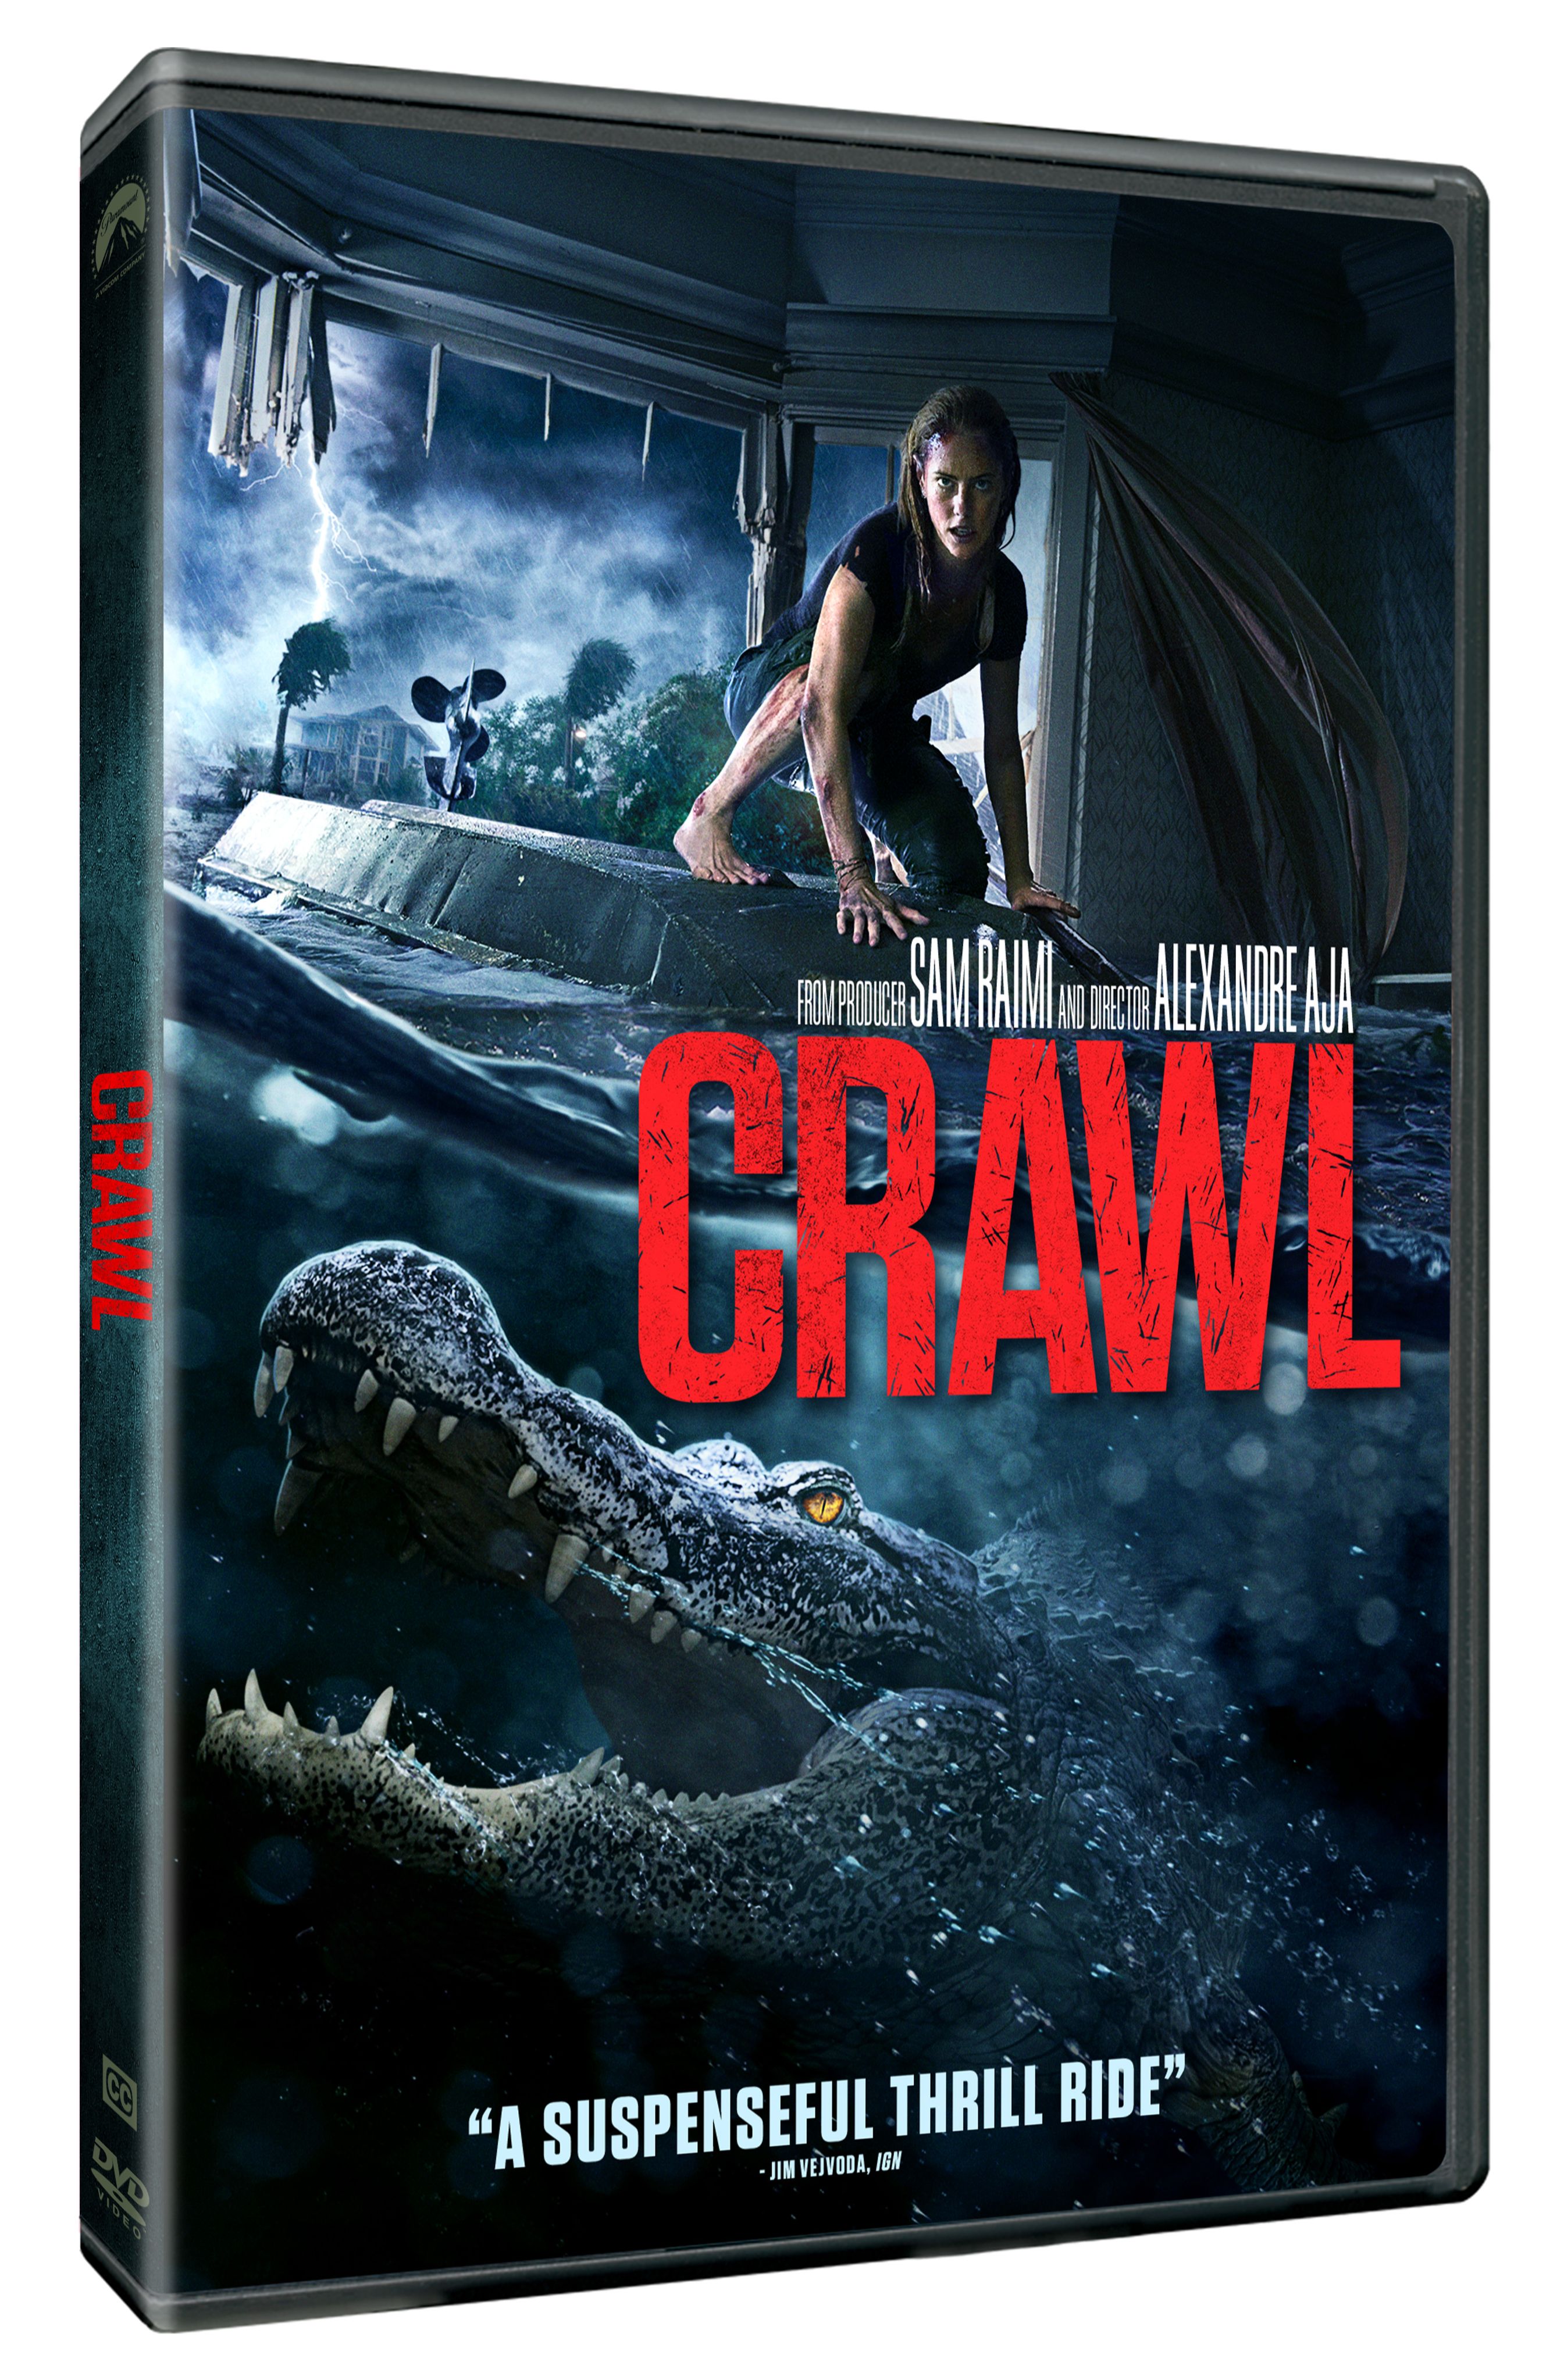 Crawl DVD cover 2